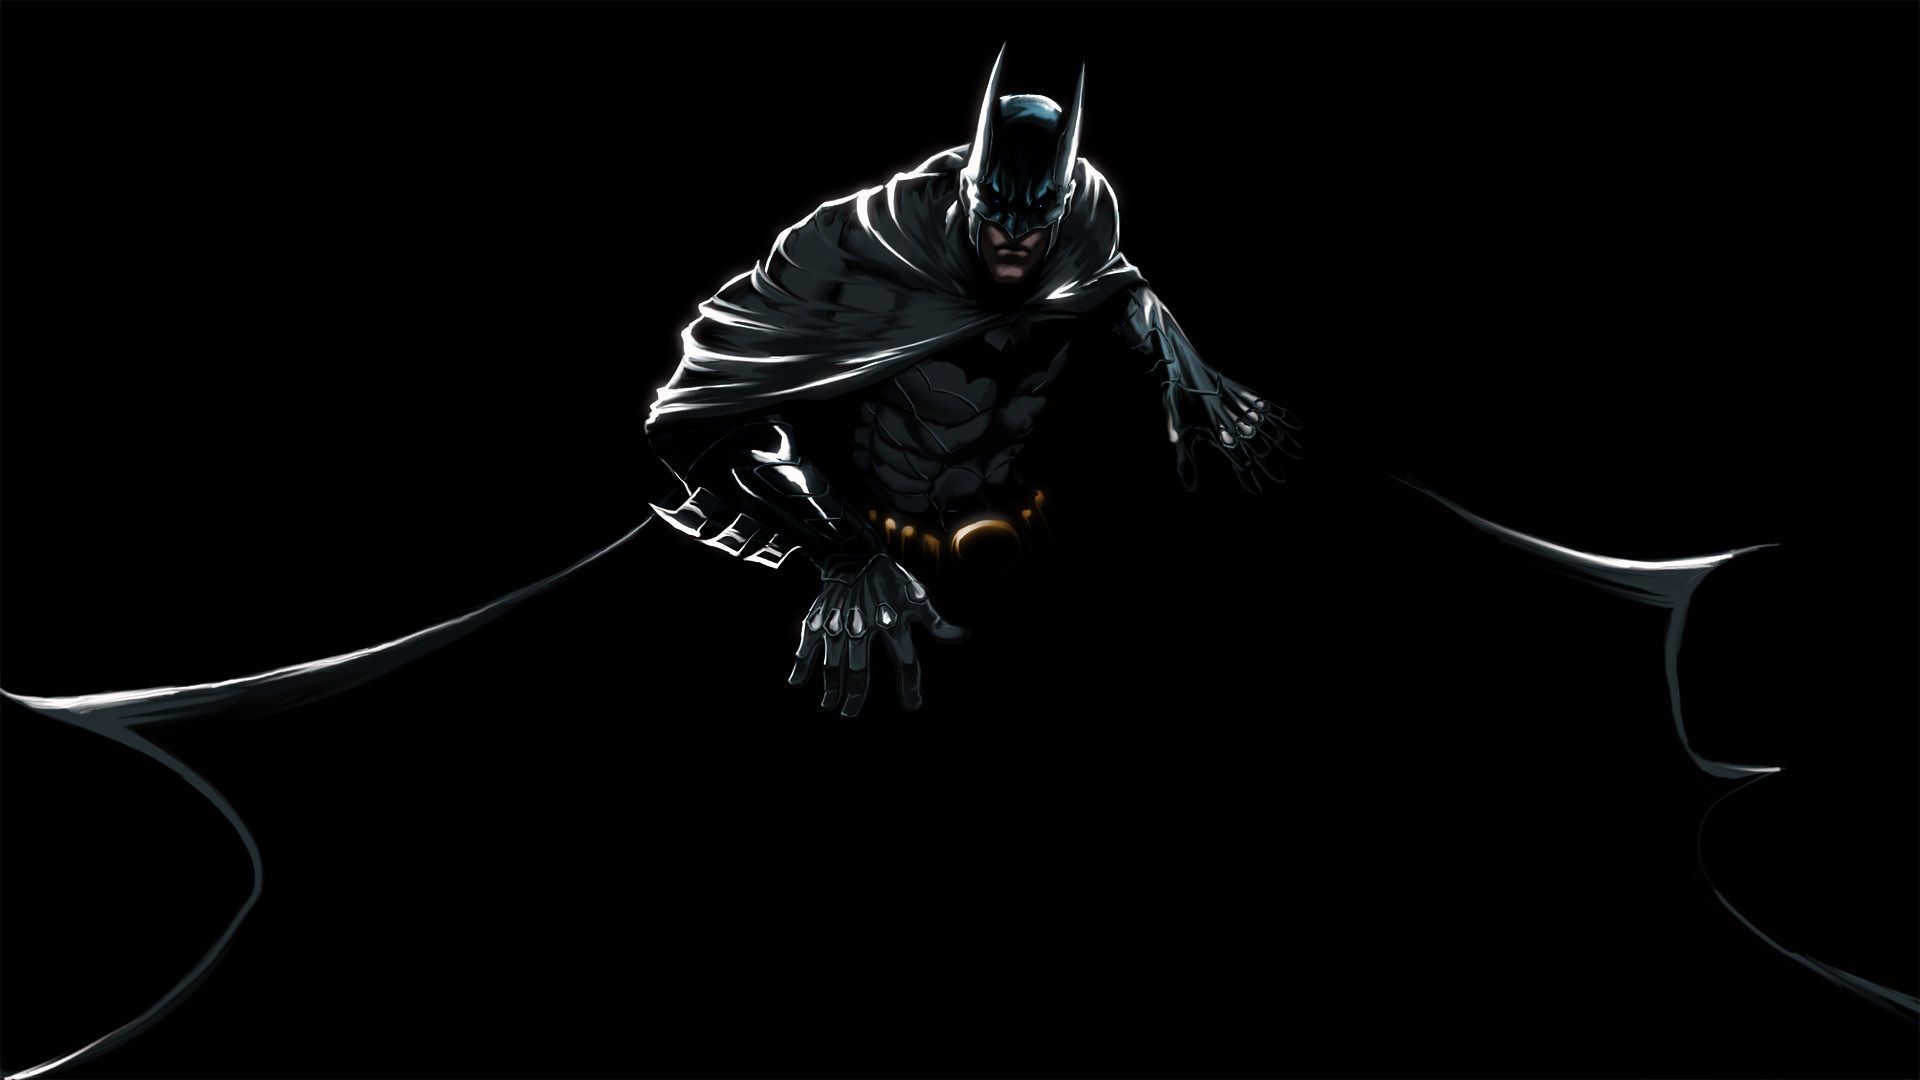 Batman HD Wallpapers Batman Images Free Cool Backgrounds